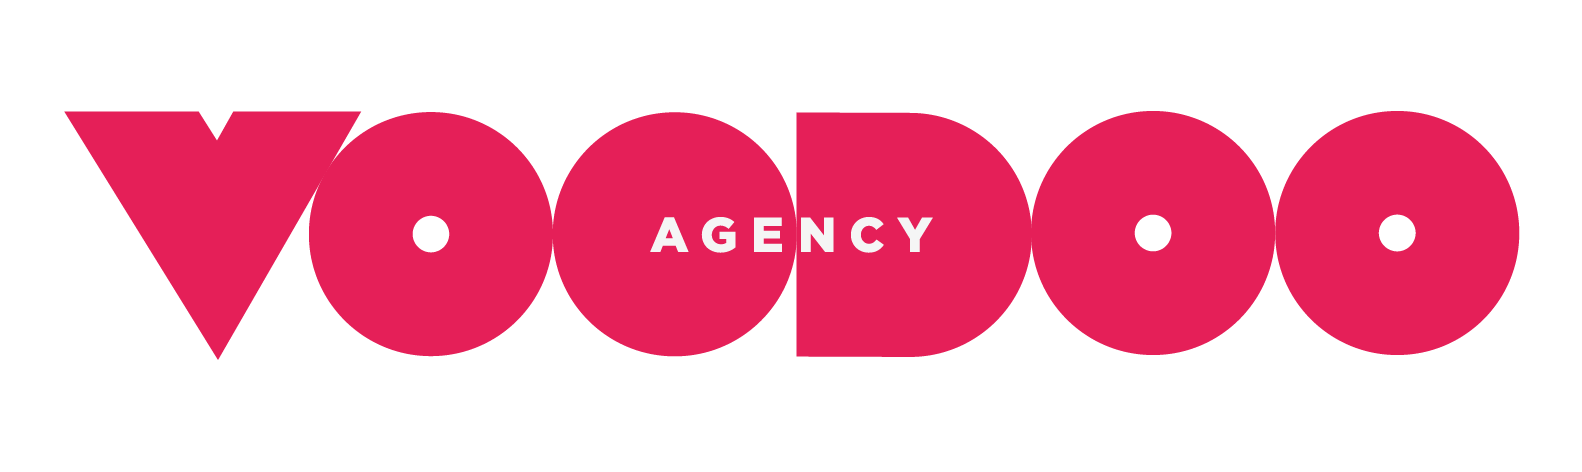 Voodoo Agency Limited Logo